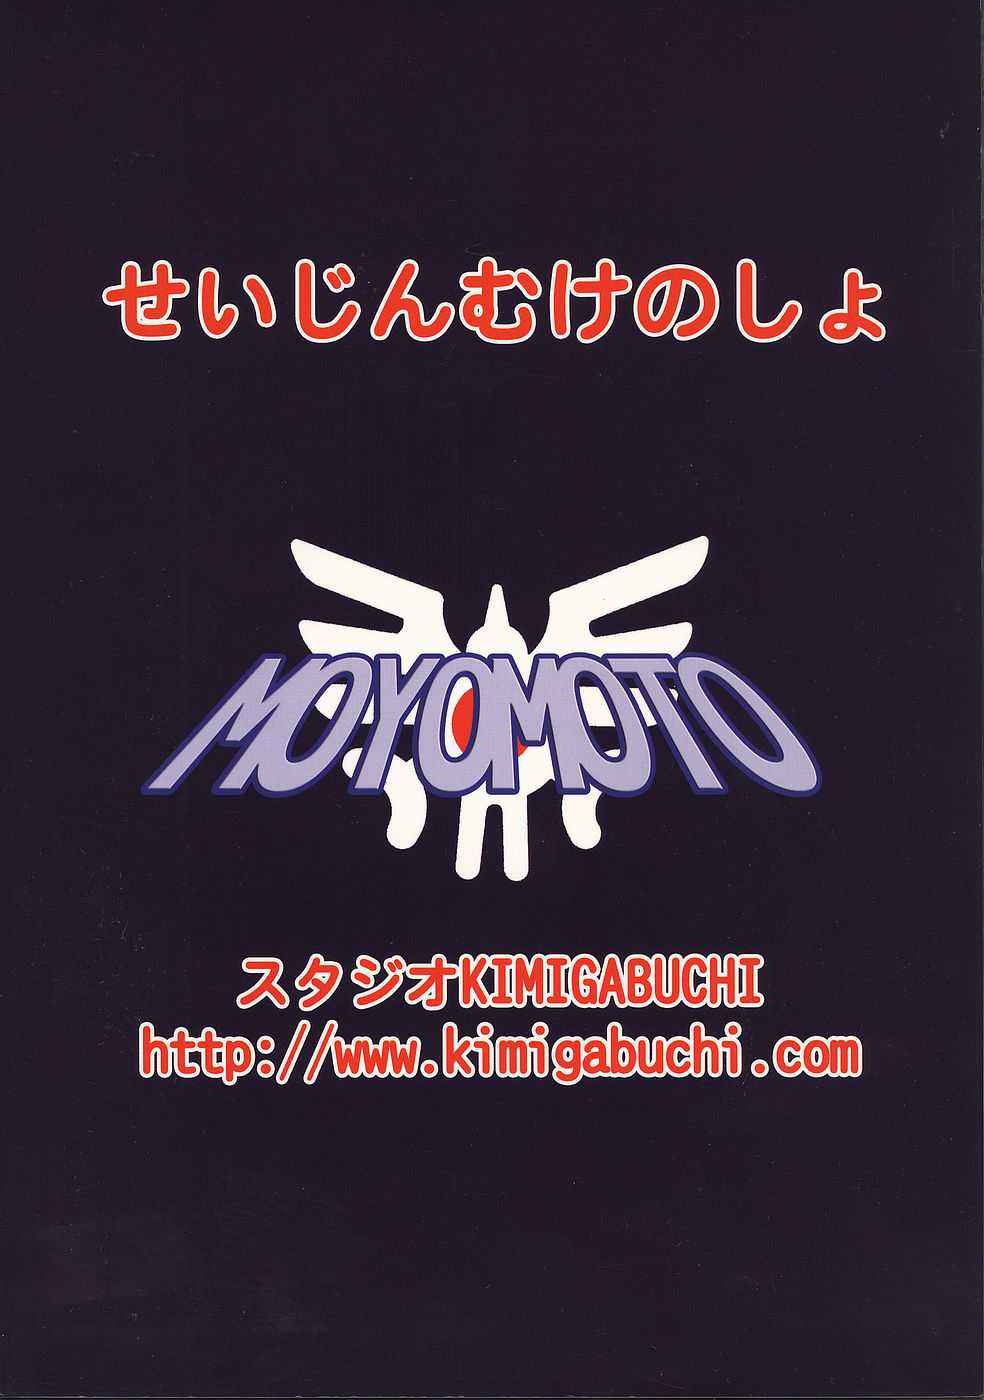 Moyomoto (Dragon Quest) 